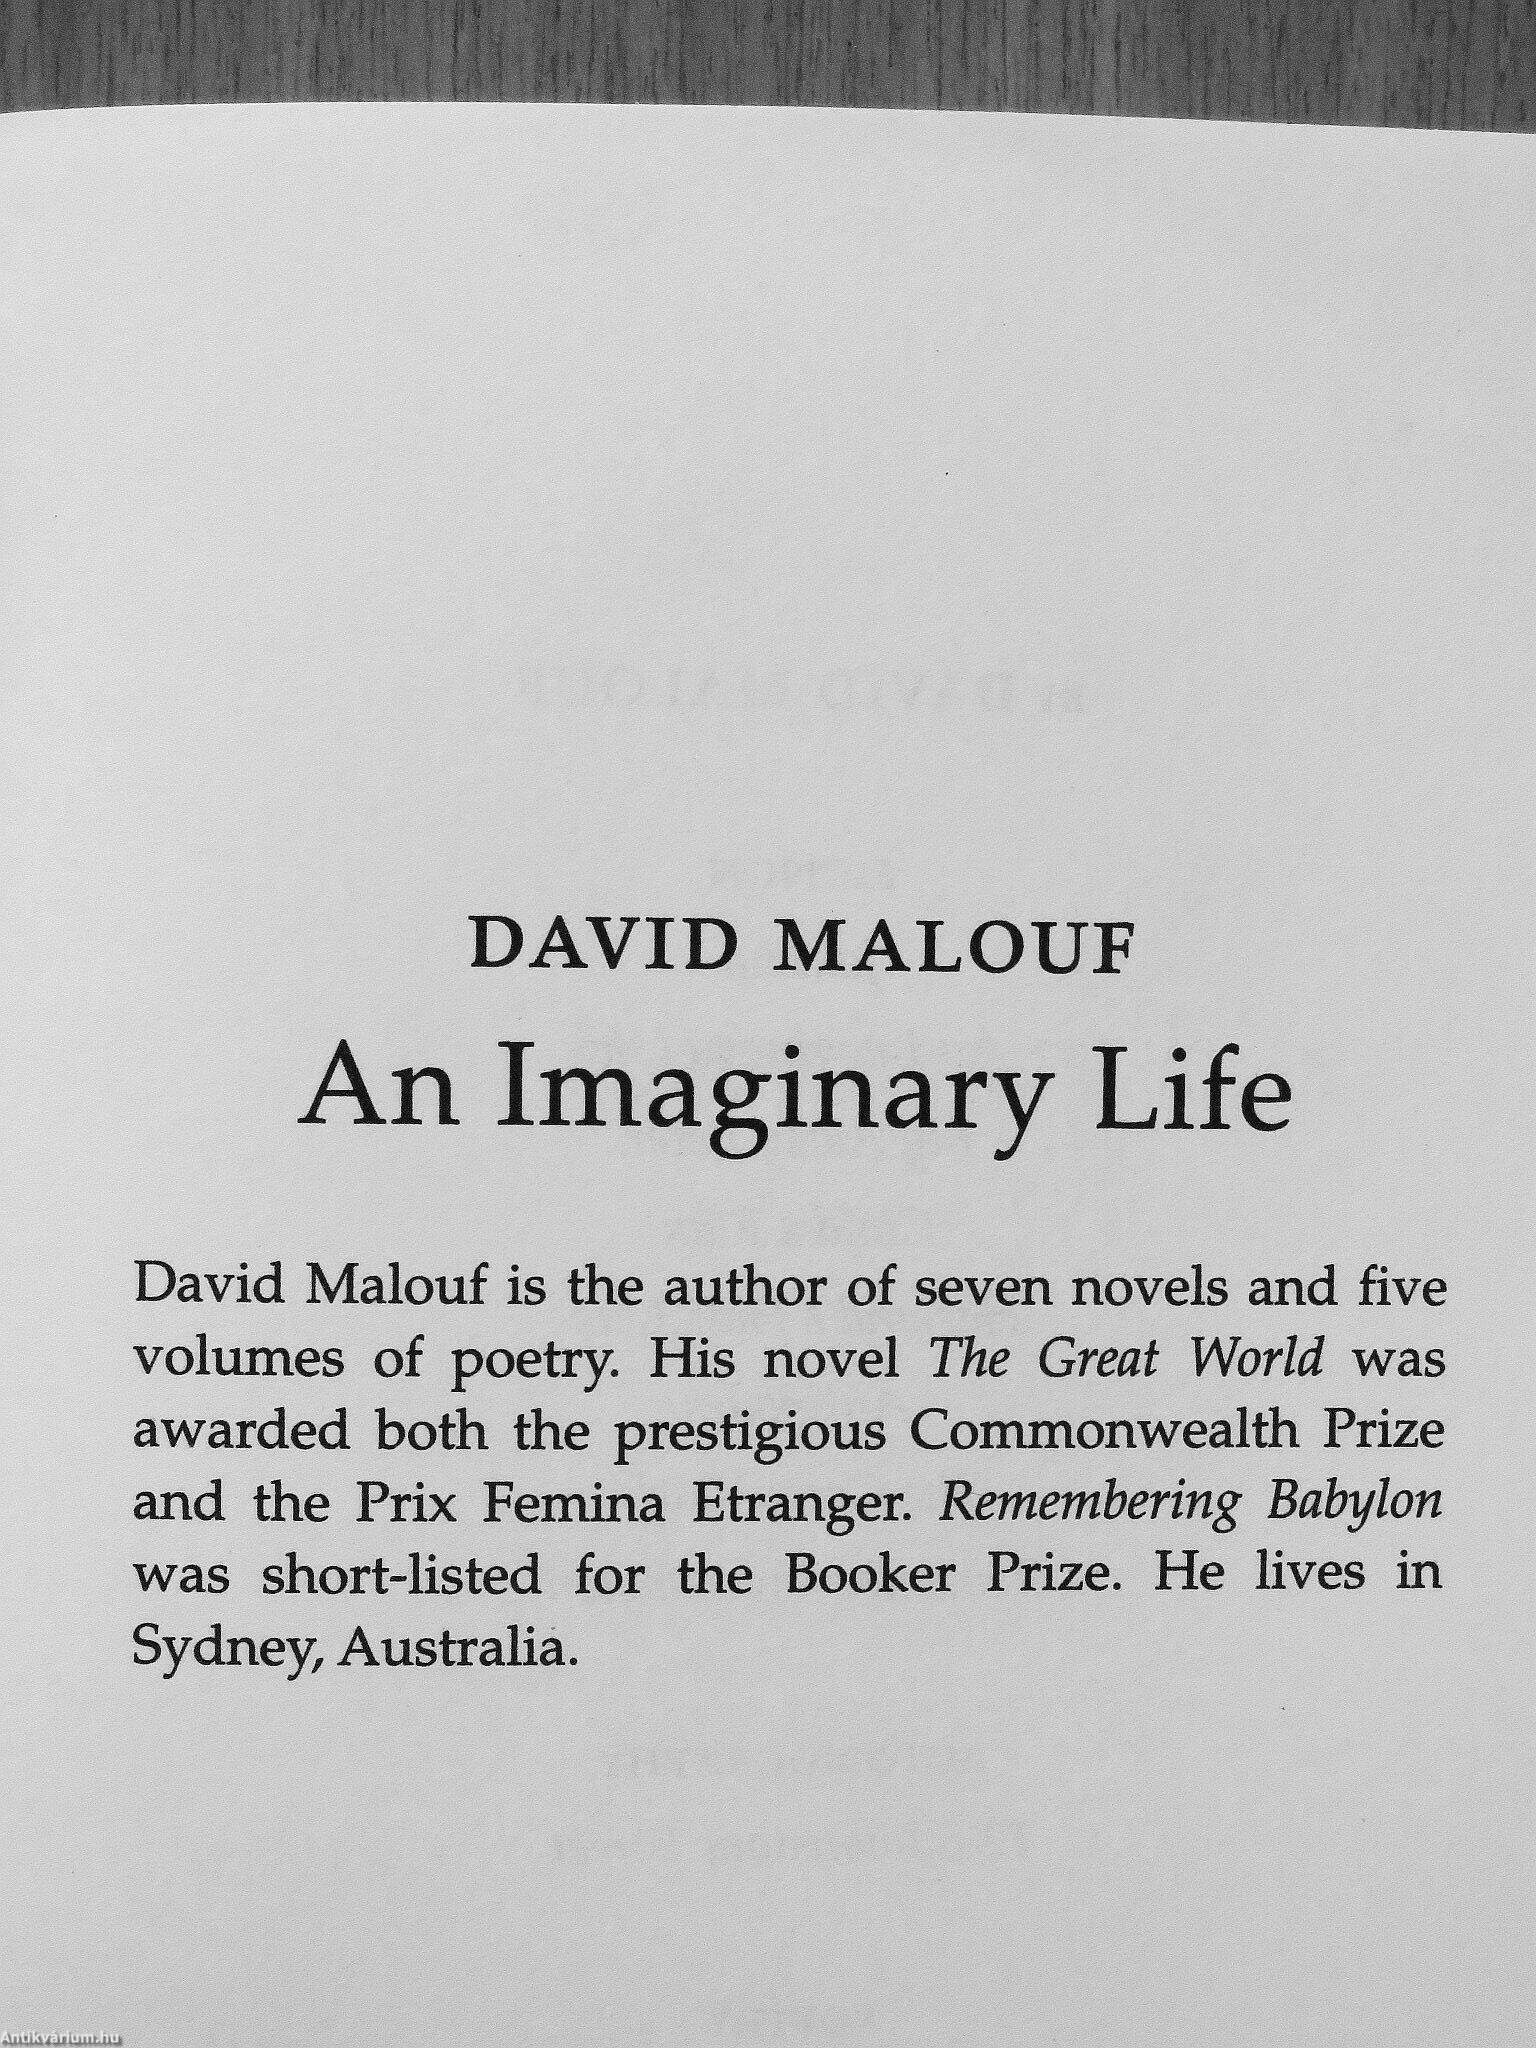 david malouf an imaginary life analysis